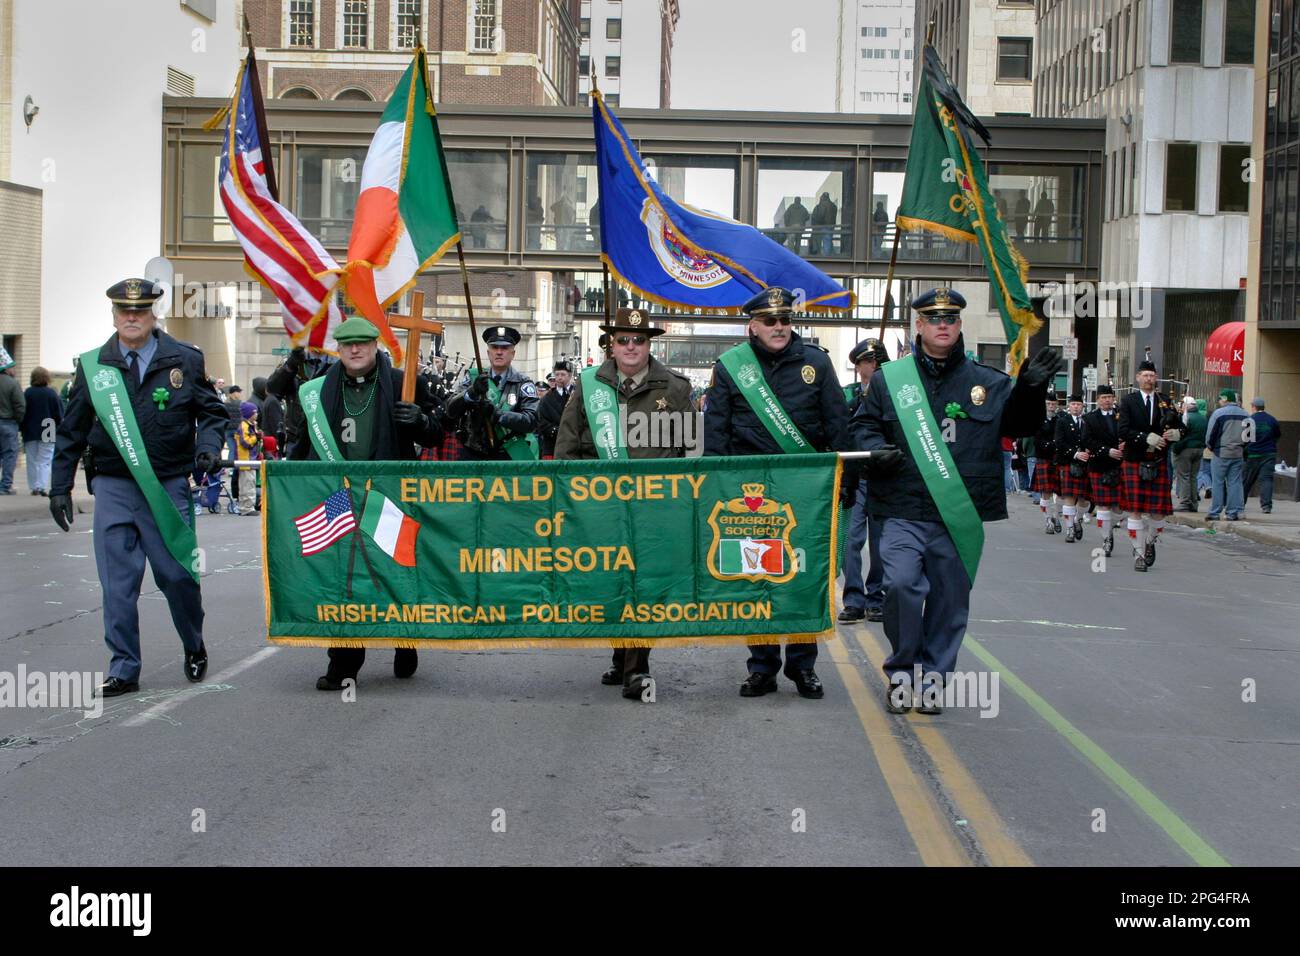 Irish-American Police Association Emerald Society of Minnesota at the Patrick’s Day parade in Saint Paul, Minnesota, 2005. Saint Paul has been celebra Stock Photo